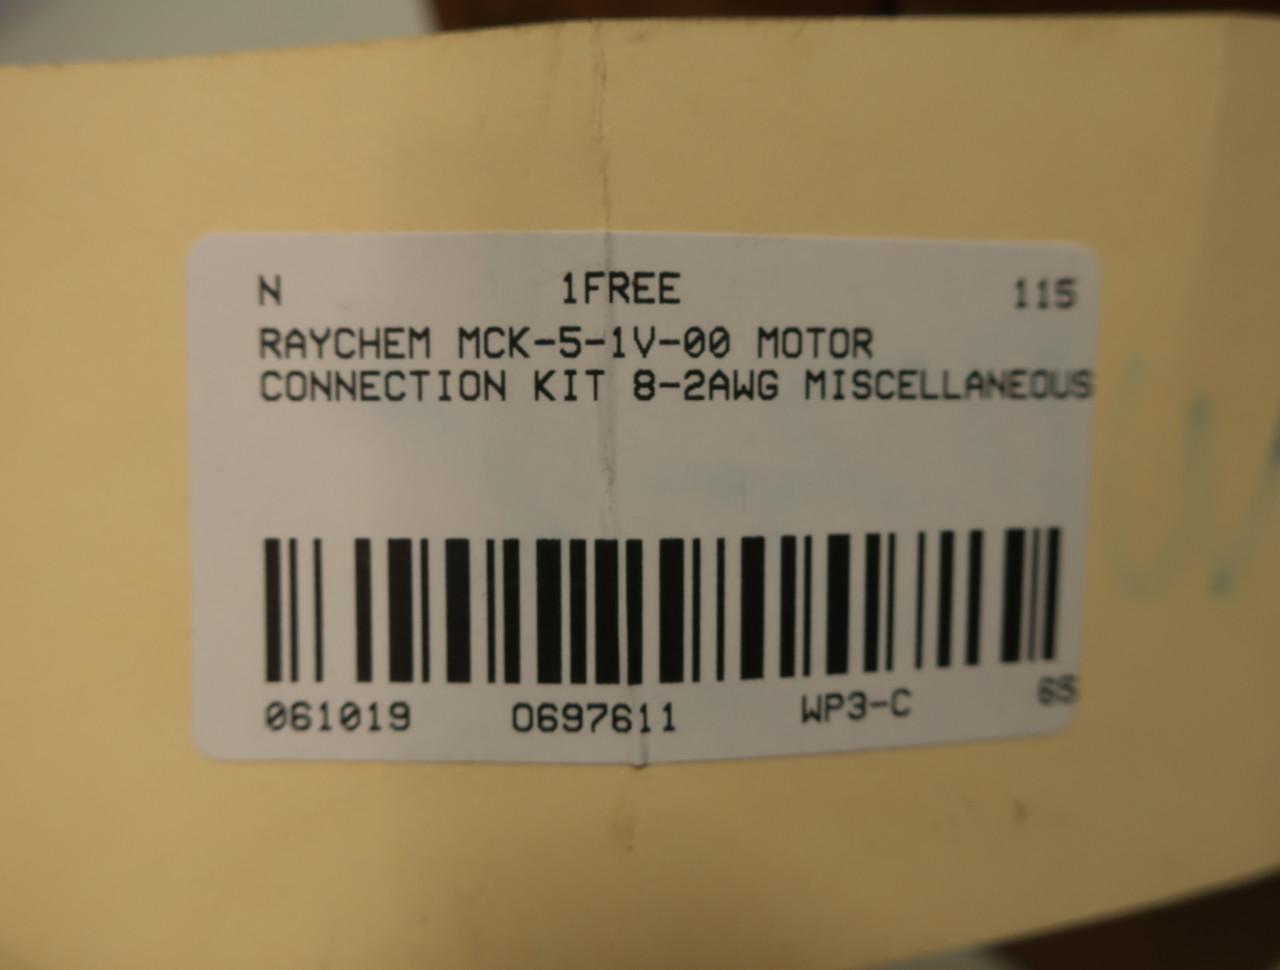 Raychem MCK-5-1V-00 Motor Connection Kit 8-2awg 